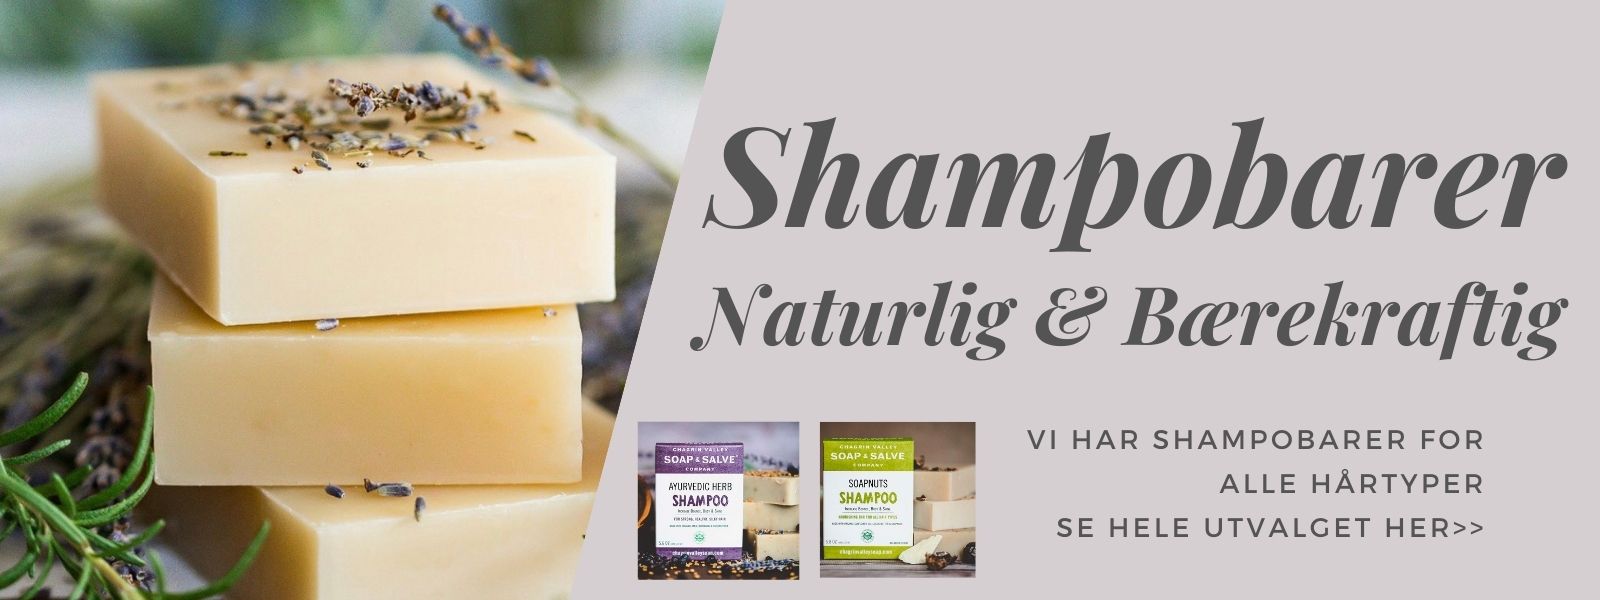 sjampobar, shampobar, shampoobar, økologisk sjampo, naturlig shampoo, økologisk hårpleie, hårpleieprodukter, økologisk shampo, 